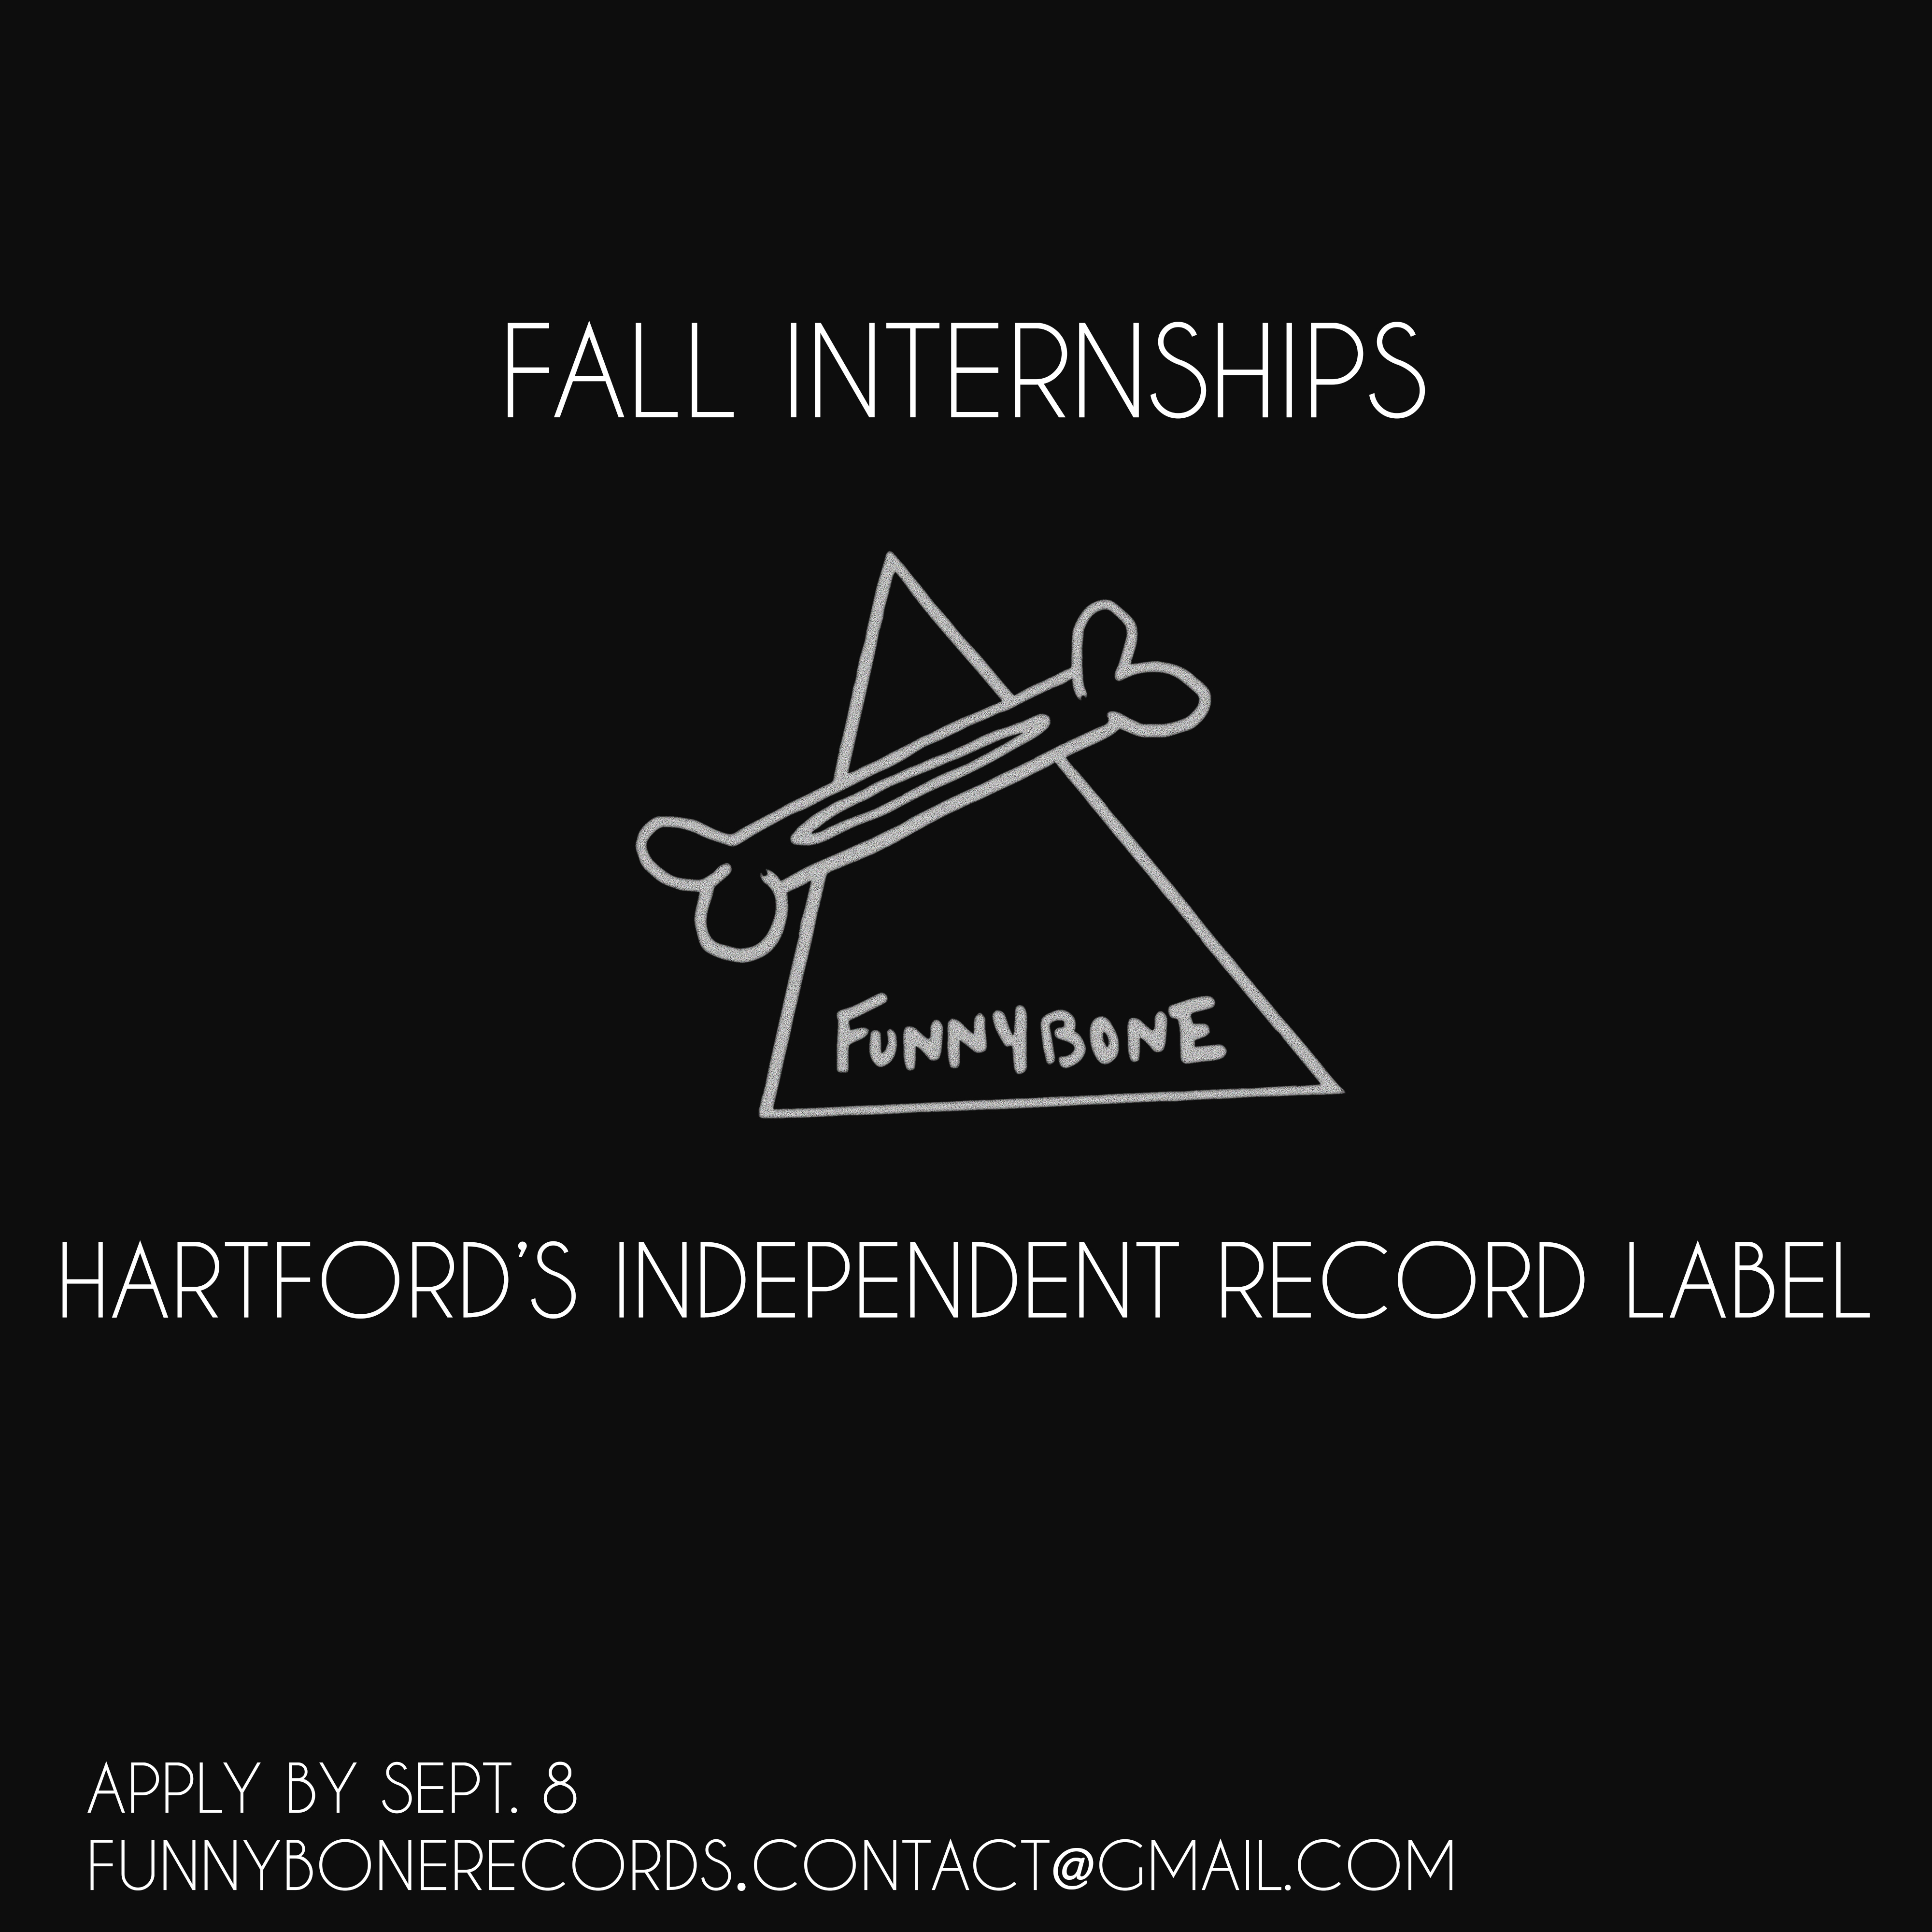 funnybone internship poster